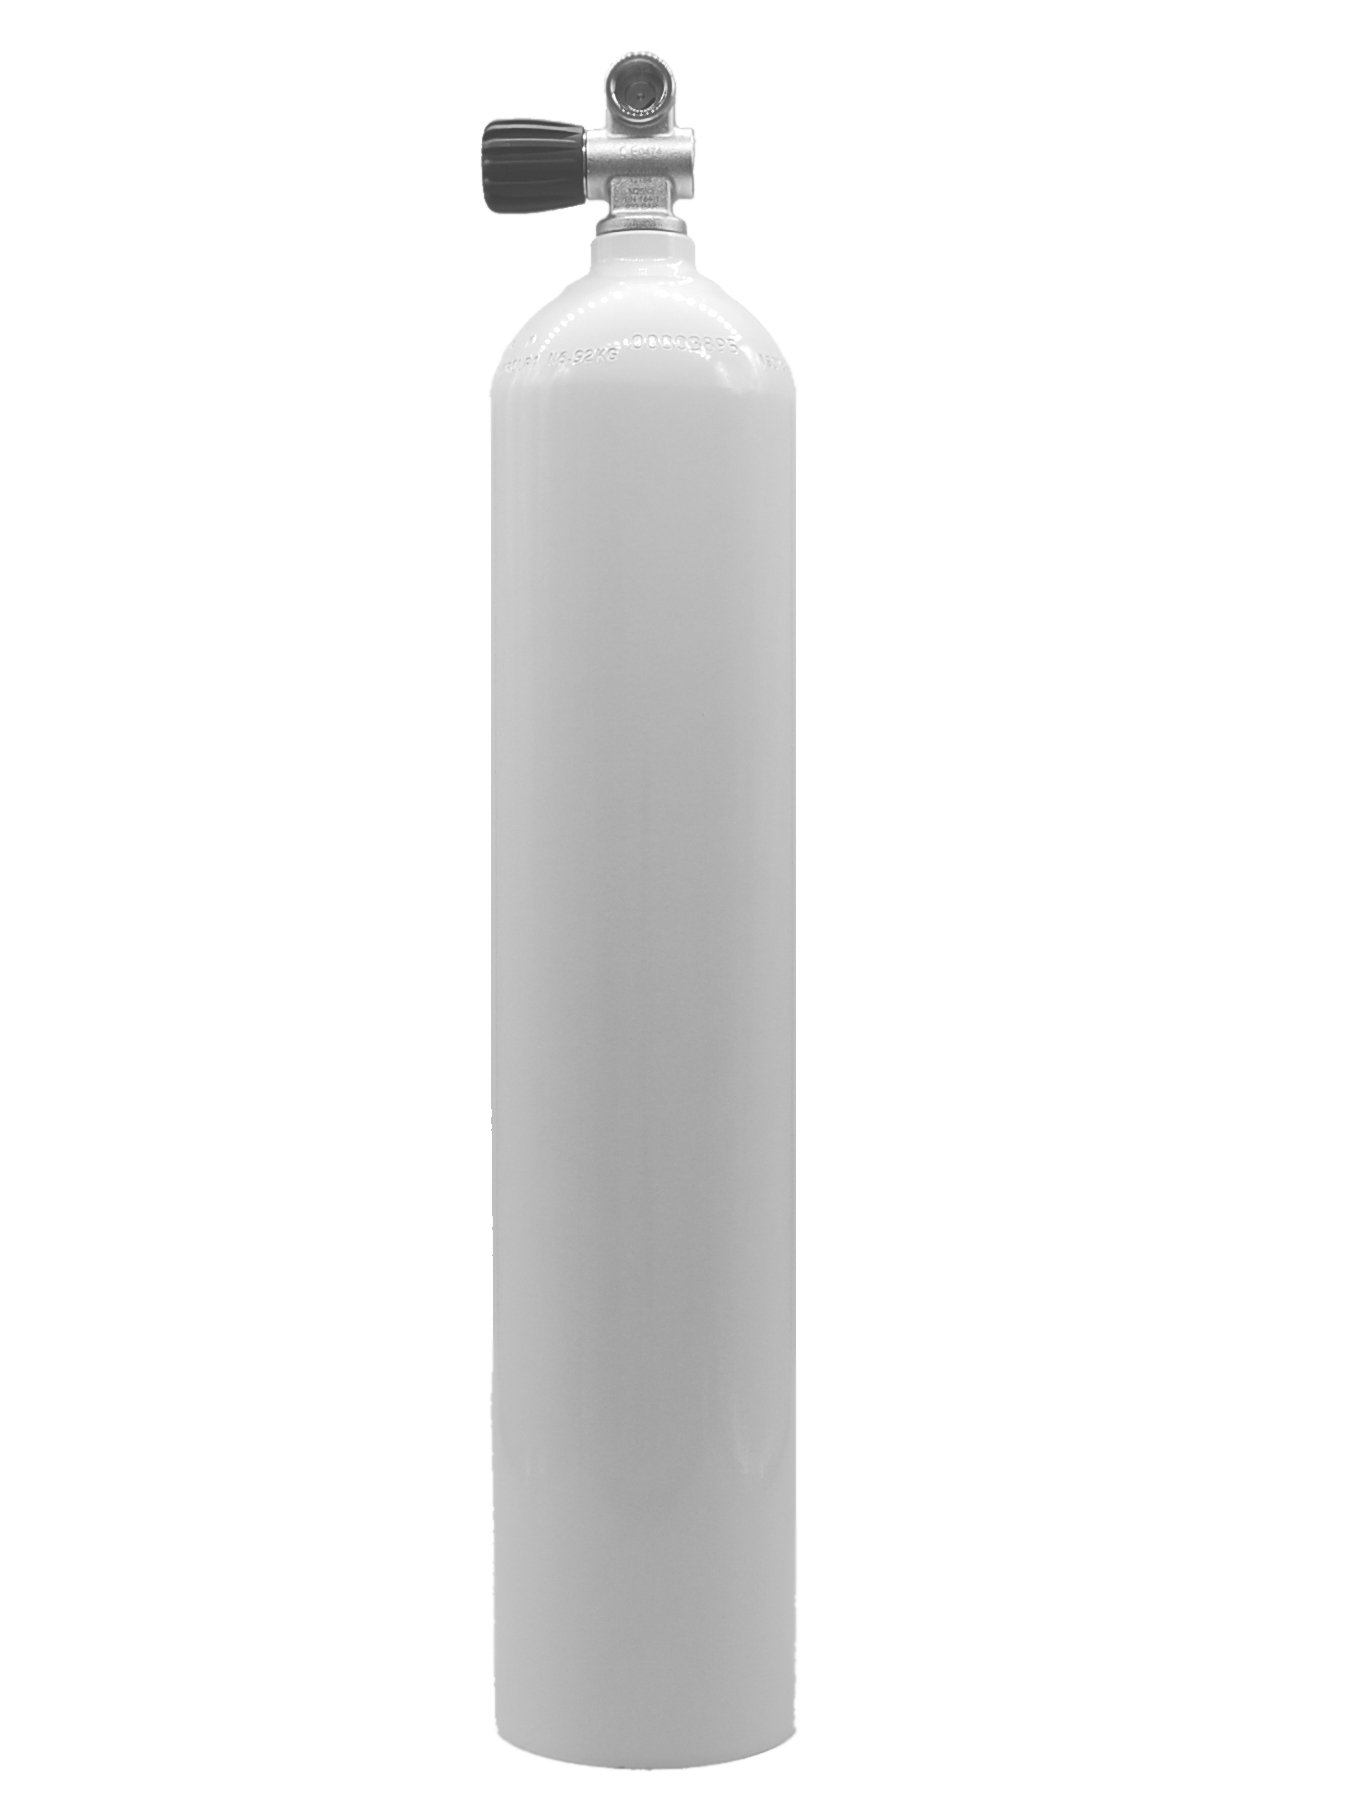 MES Tauchflasche Alu 5,7L weiss mit Ventil